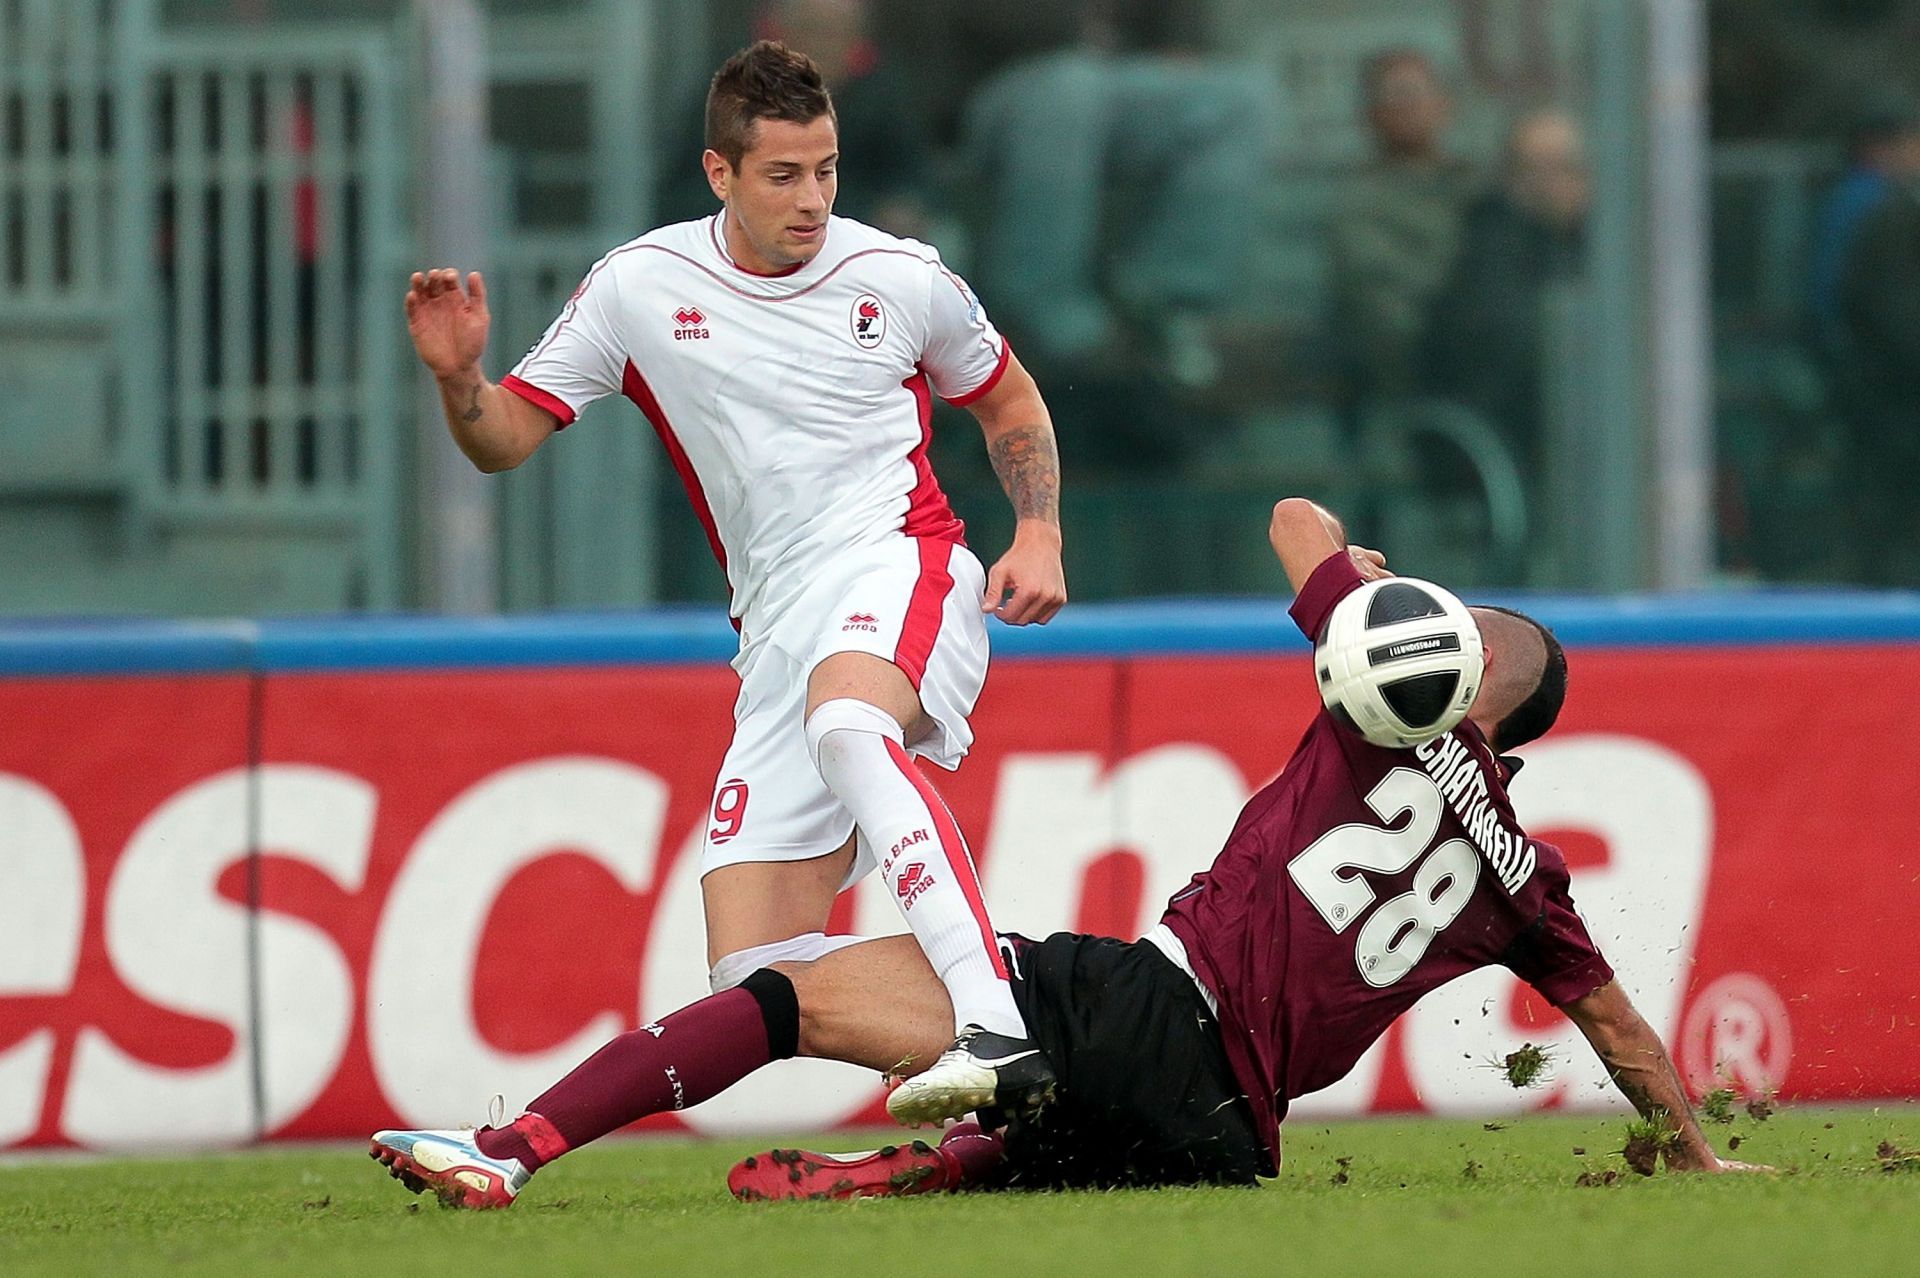 Francesco Grondolfo in action for AS Bari in Serie B